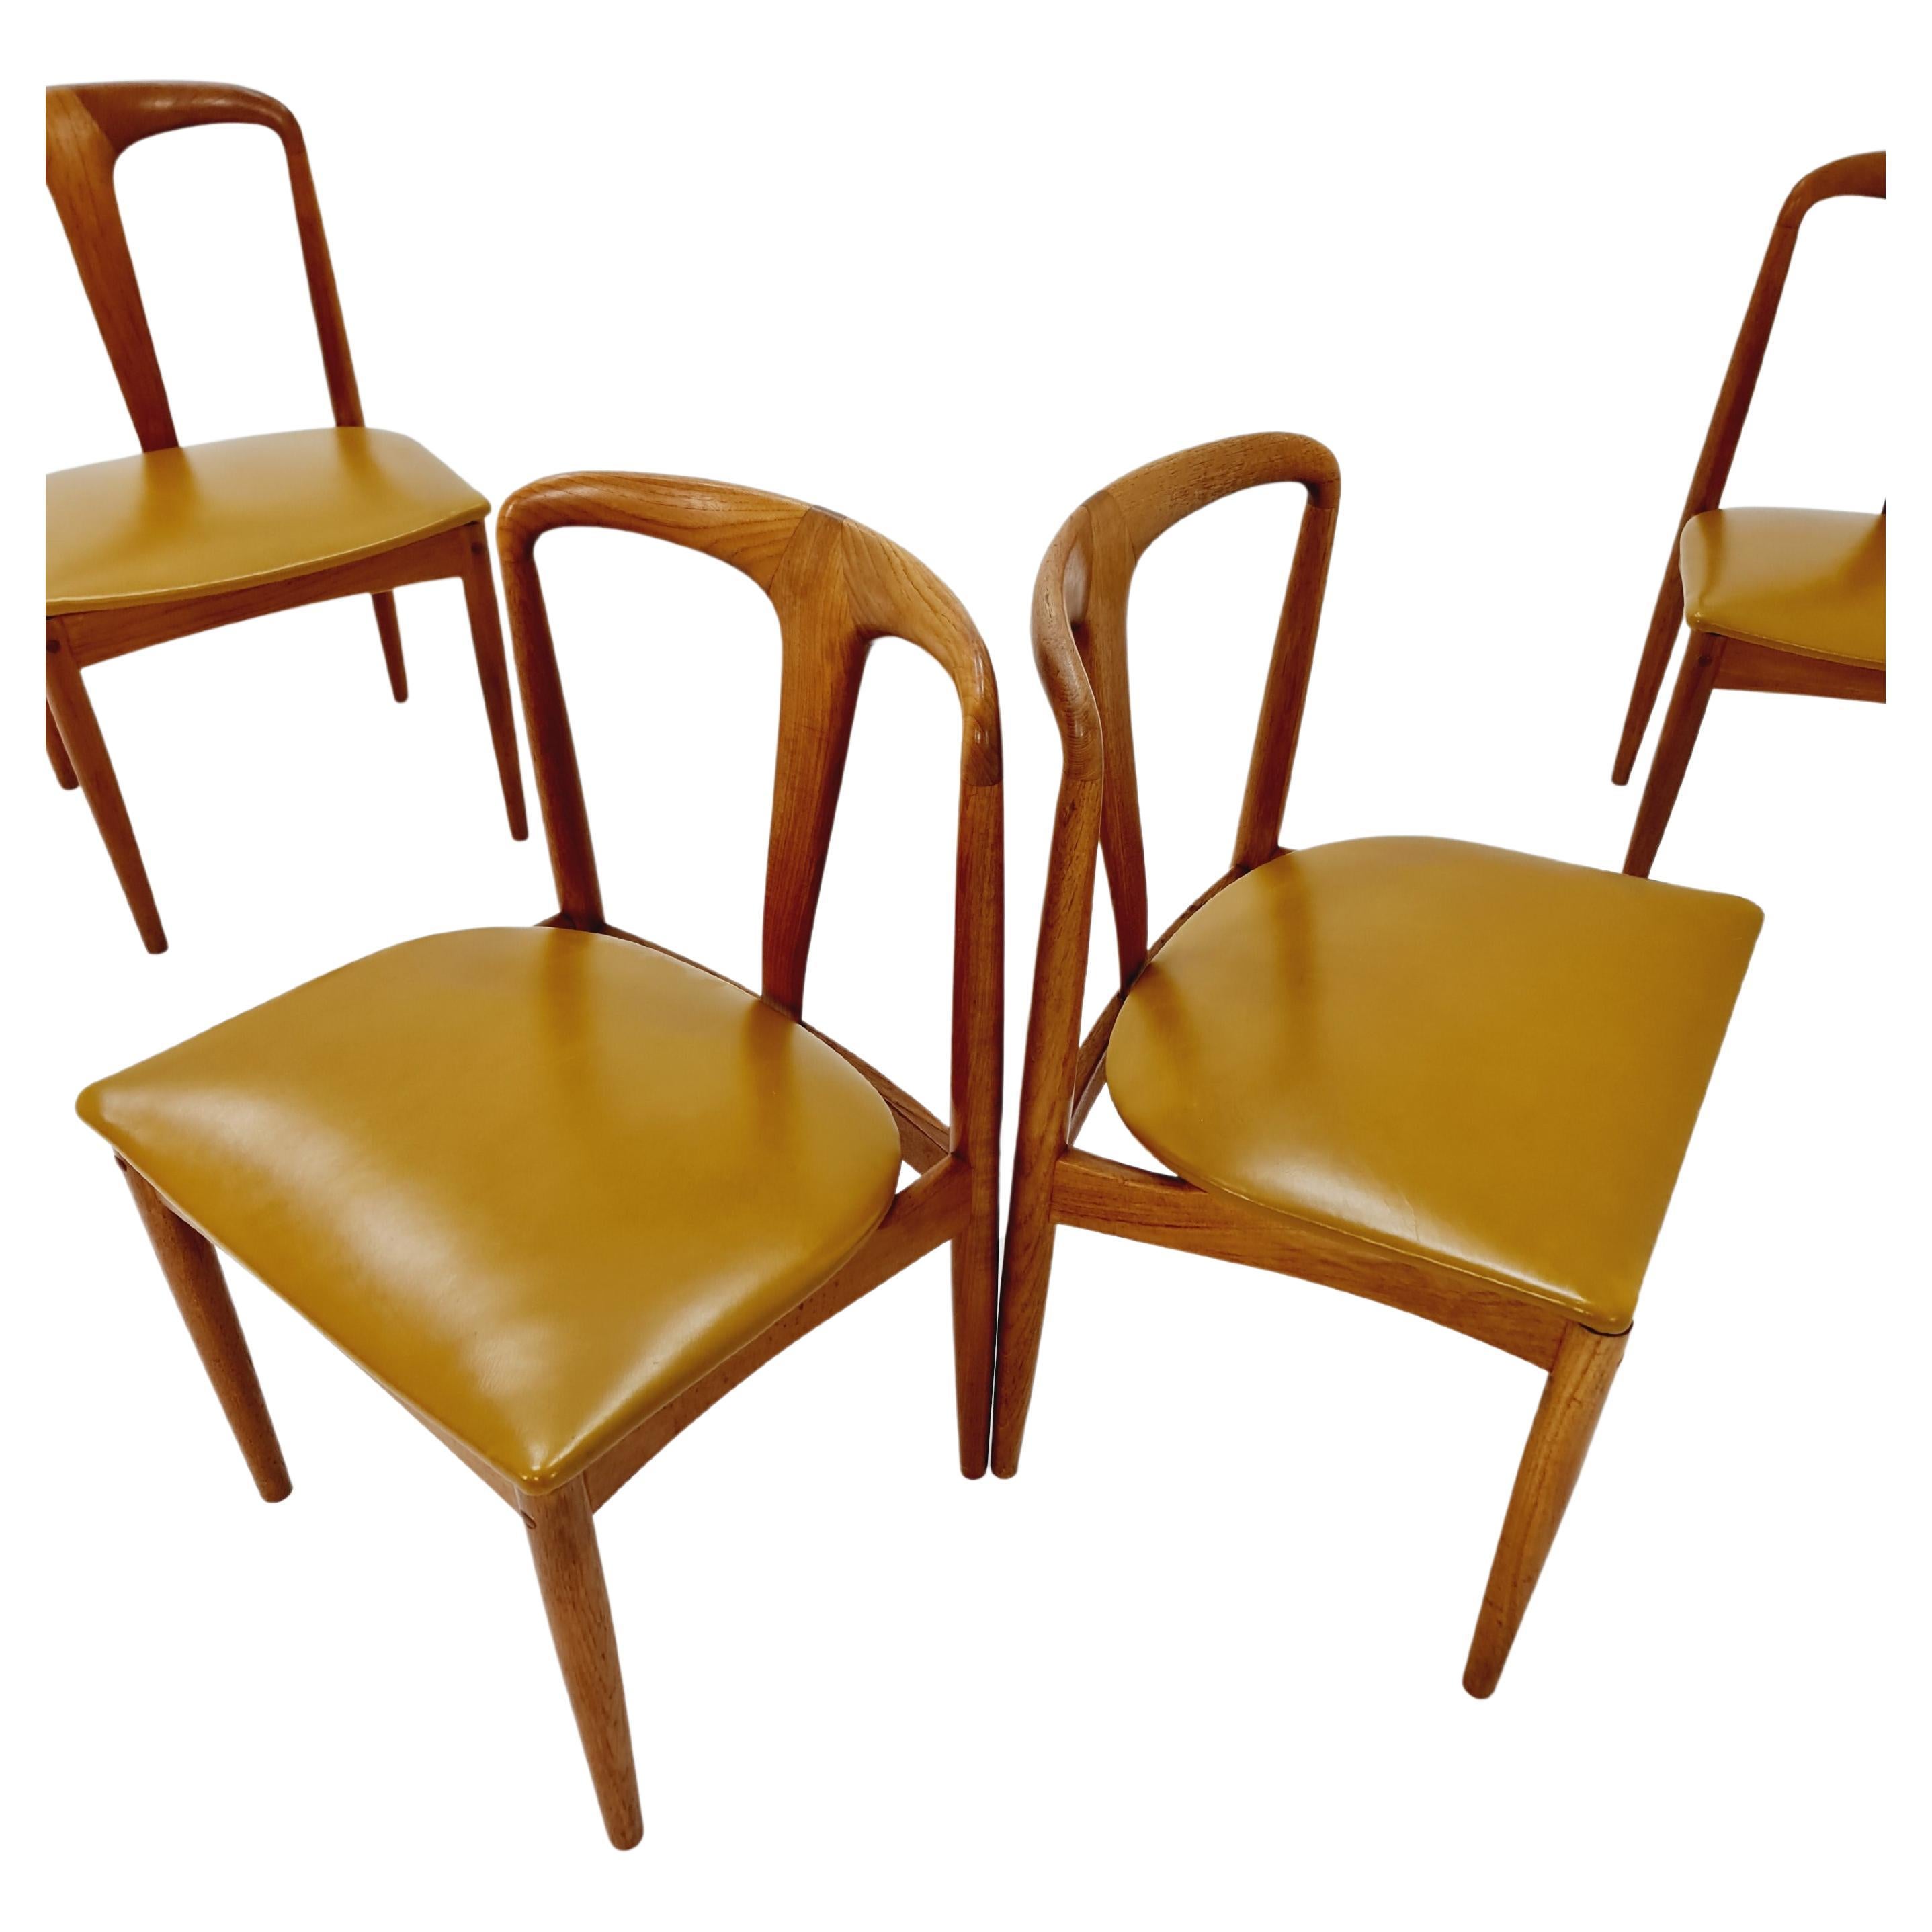 Vintage Danish teak dining chair   by johannes Andersen for Uldum Mobelfabrik , 1960s, 

Designer :   johannes Andersen for Uldum Mobelfabrik
Made in Denmark in the 60s

Dimensions:
Width:  52  cm
Depth: 43  cm
Height: 78   cm
Seat Height: 44 